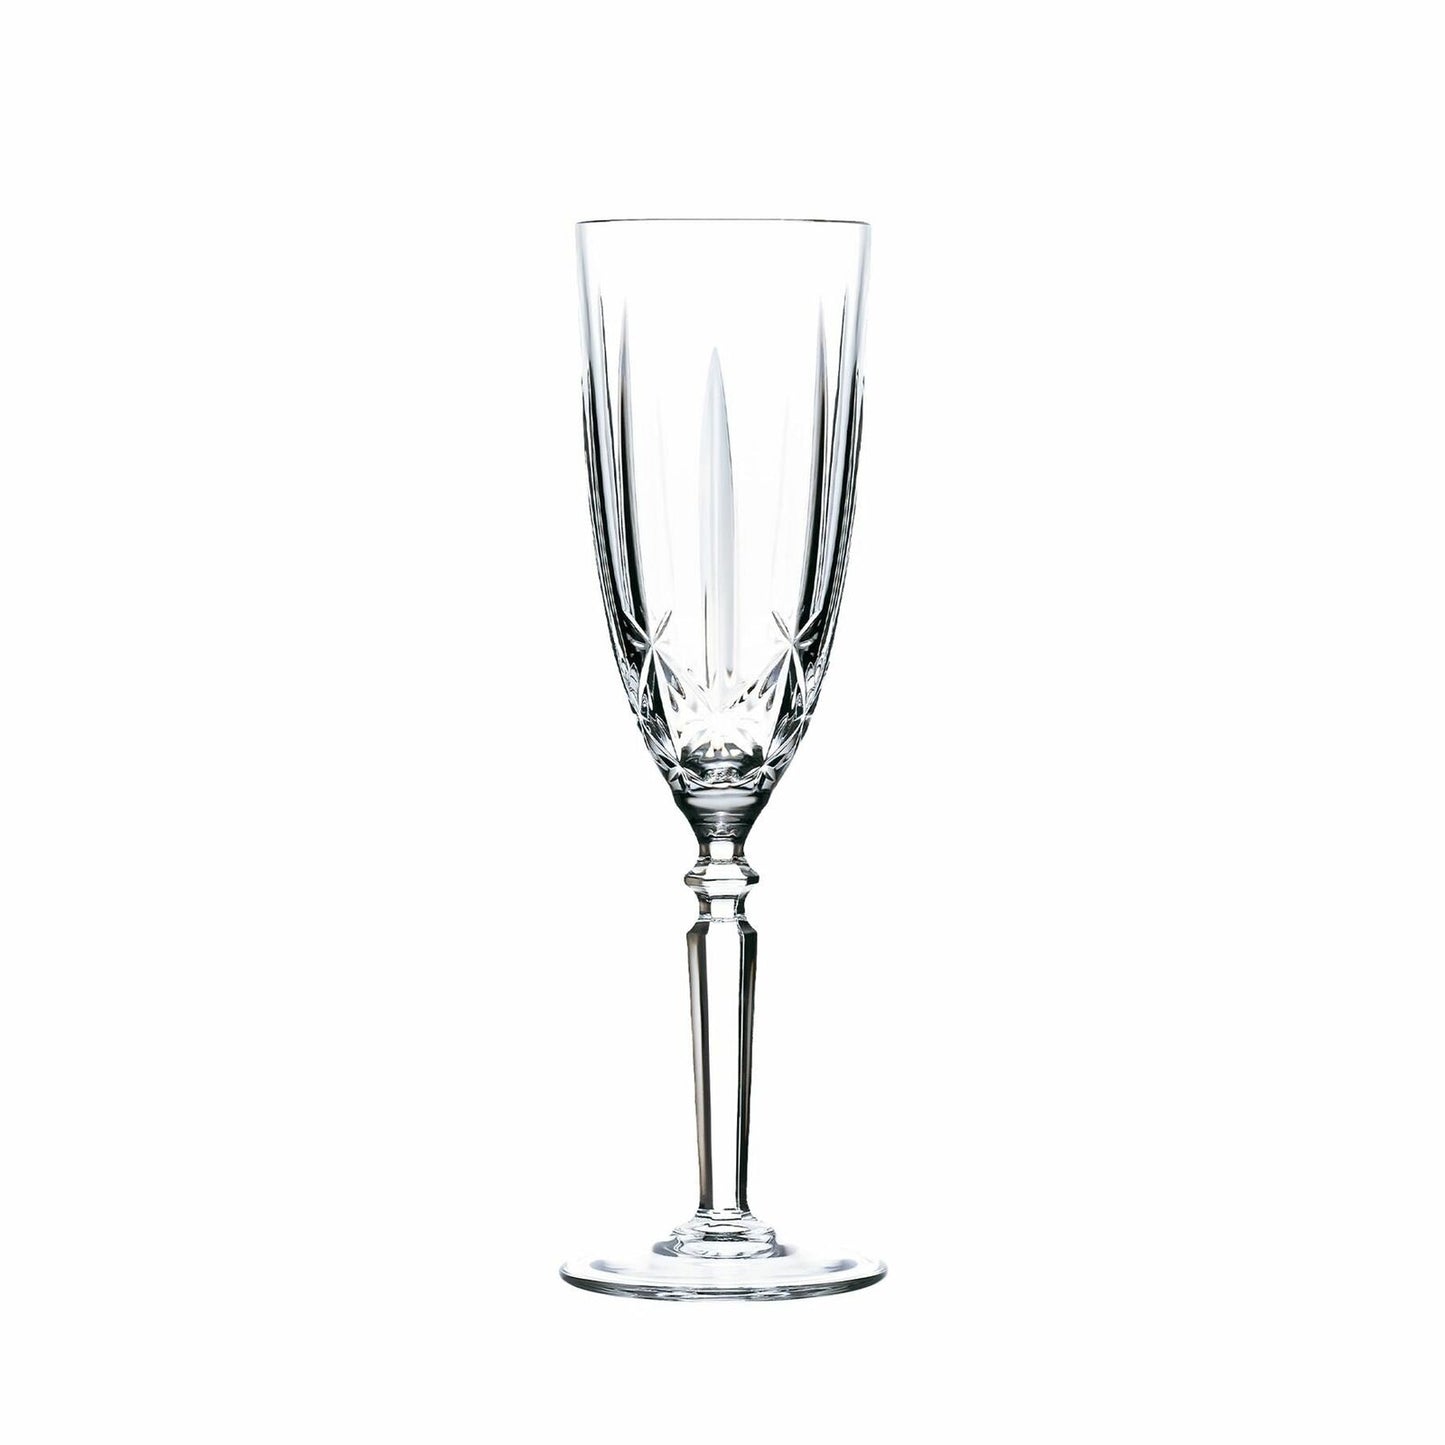 6x Champagne Flutes Glasses Set RCR Crystal Cut Wine Glass Stemware 200ml